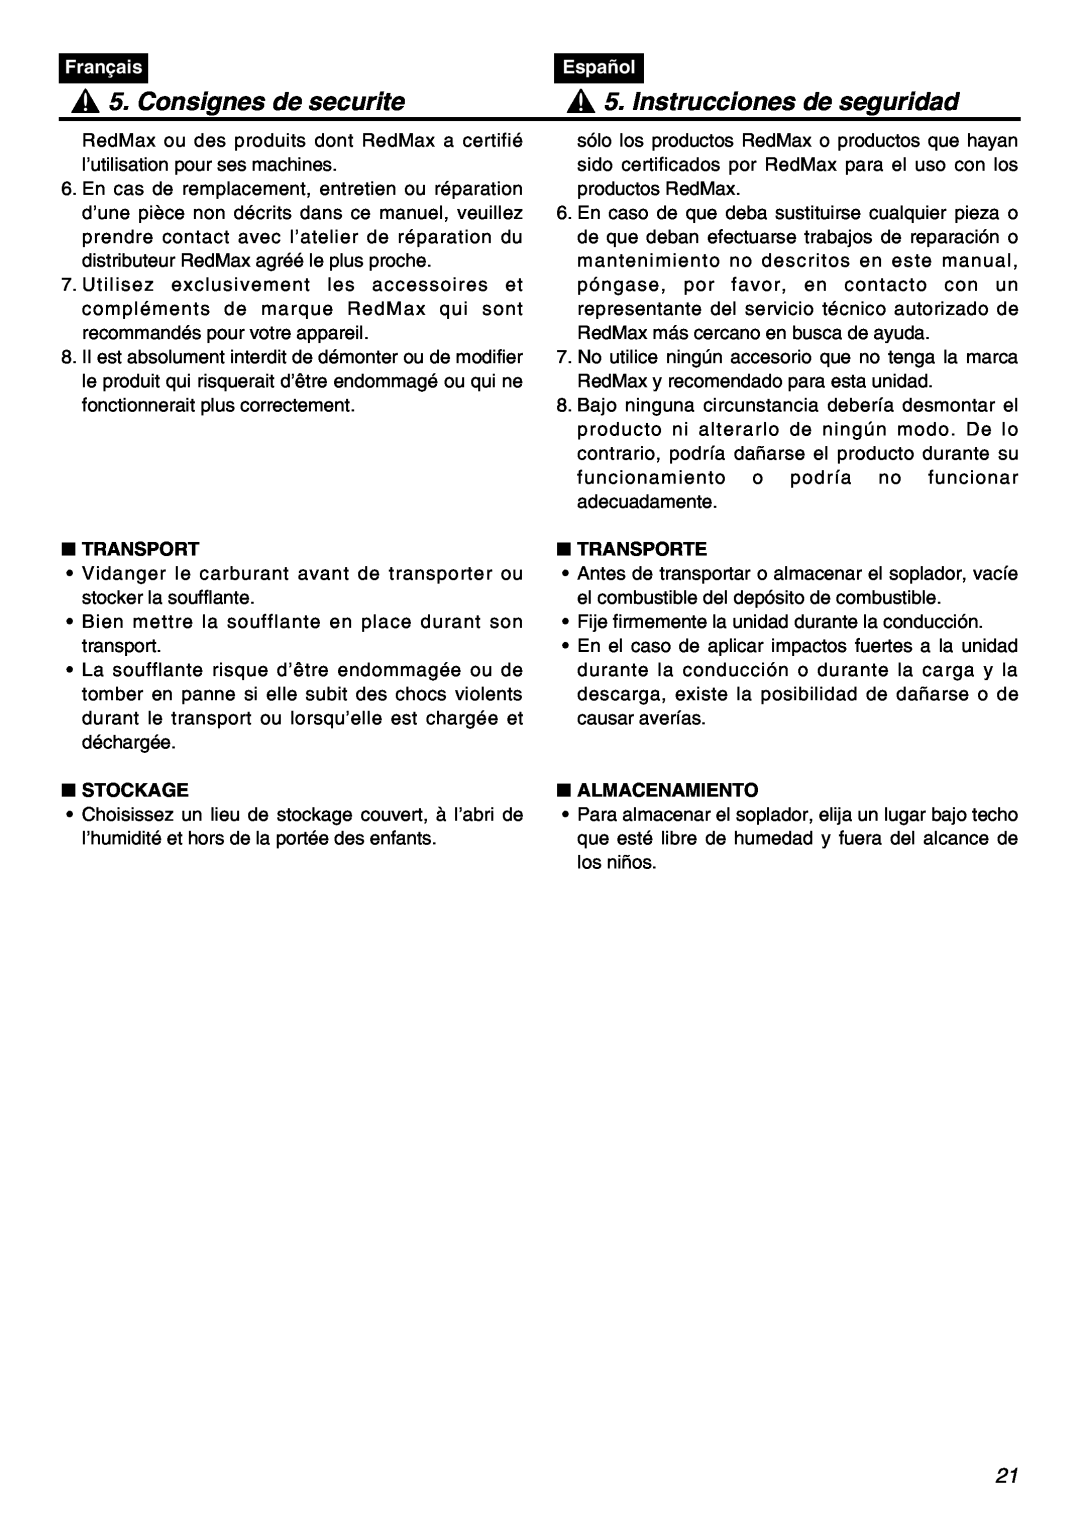 RedMax EBZ7001-CA manual Consignes de securite, Instrucciones de seguridad, Français, Español, Stockage, Transporte 